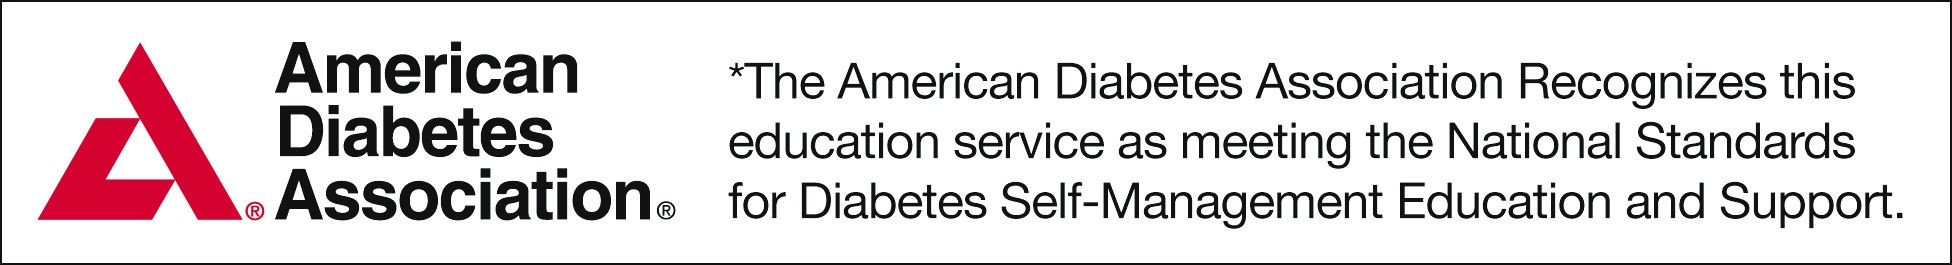 Center for Perinatal - Diabetes recognition logo.jpg